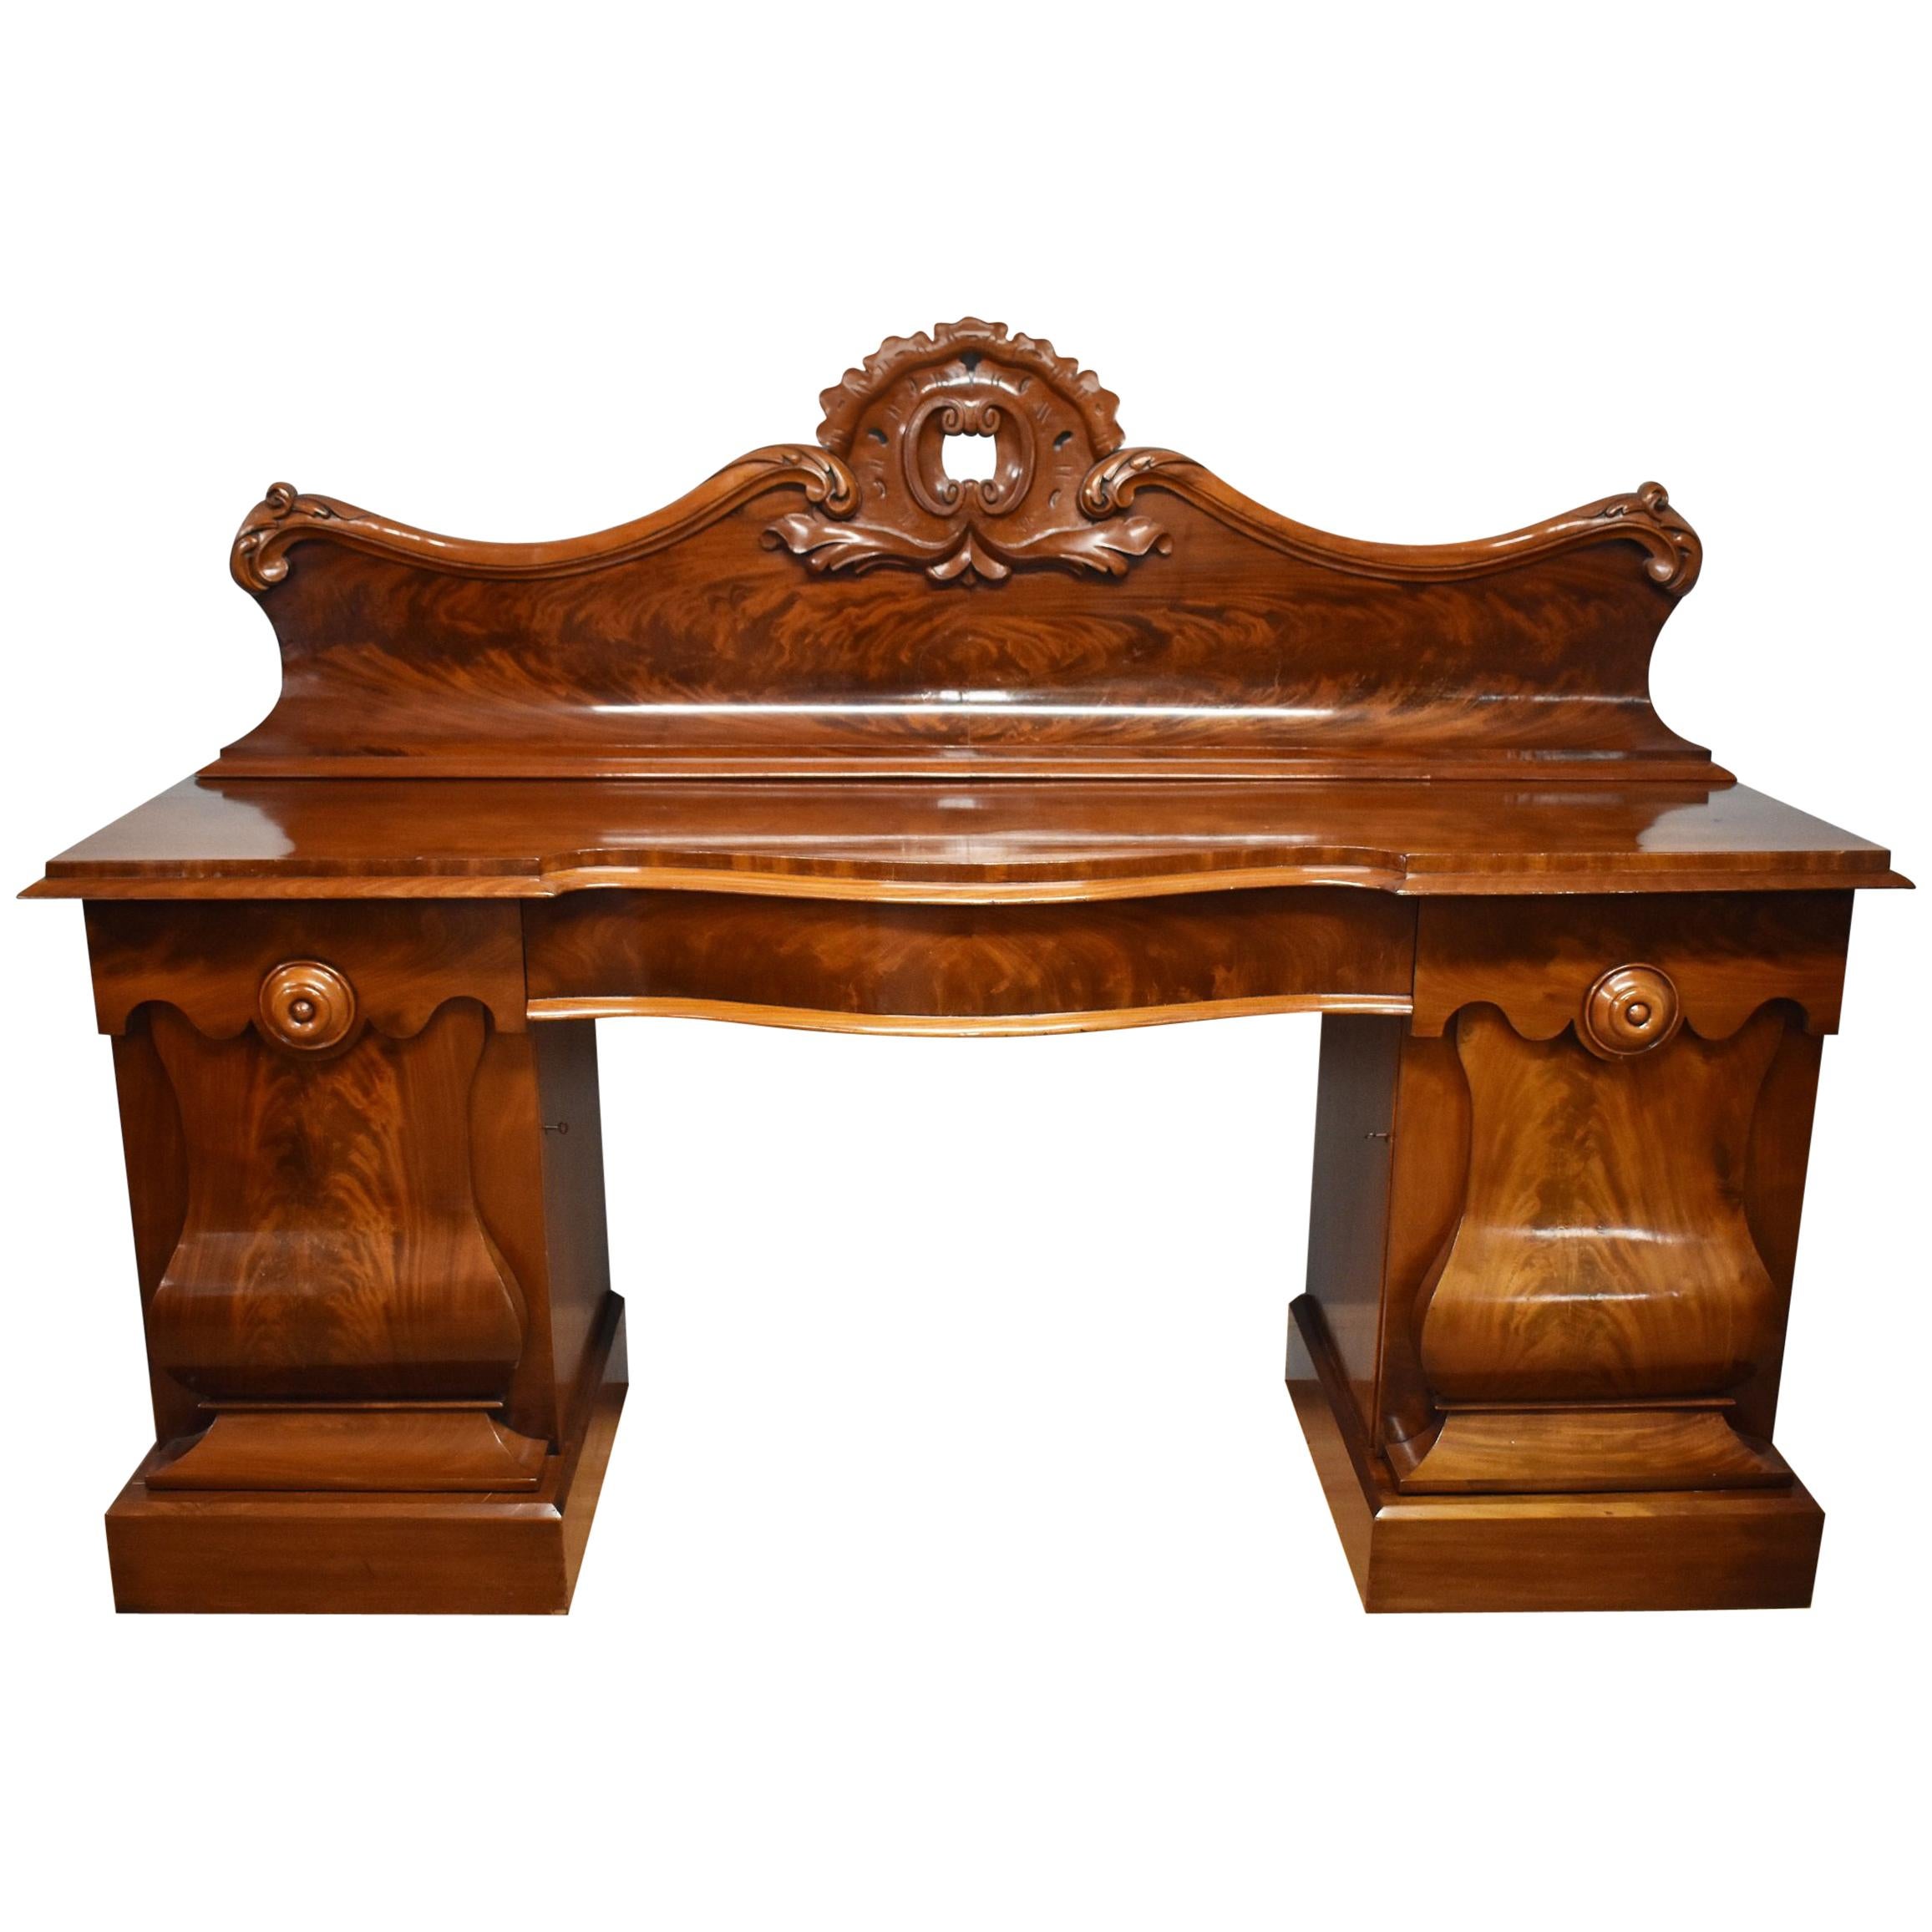 19th Century Victorian Mahogany Pedestal Sideboard